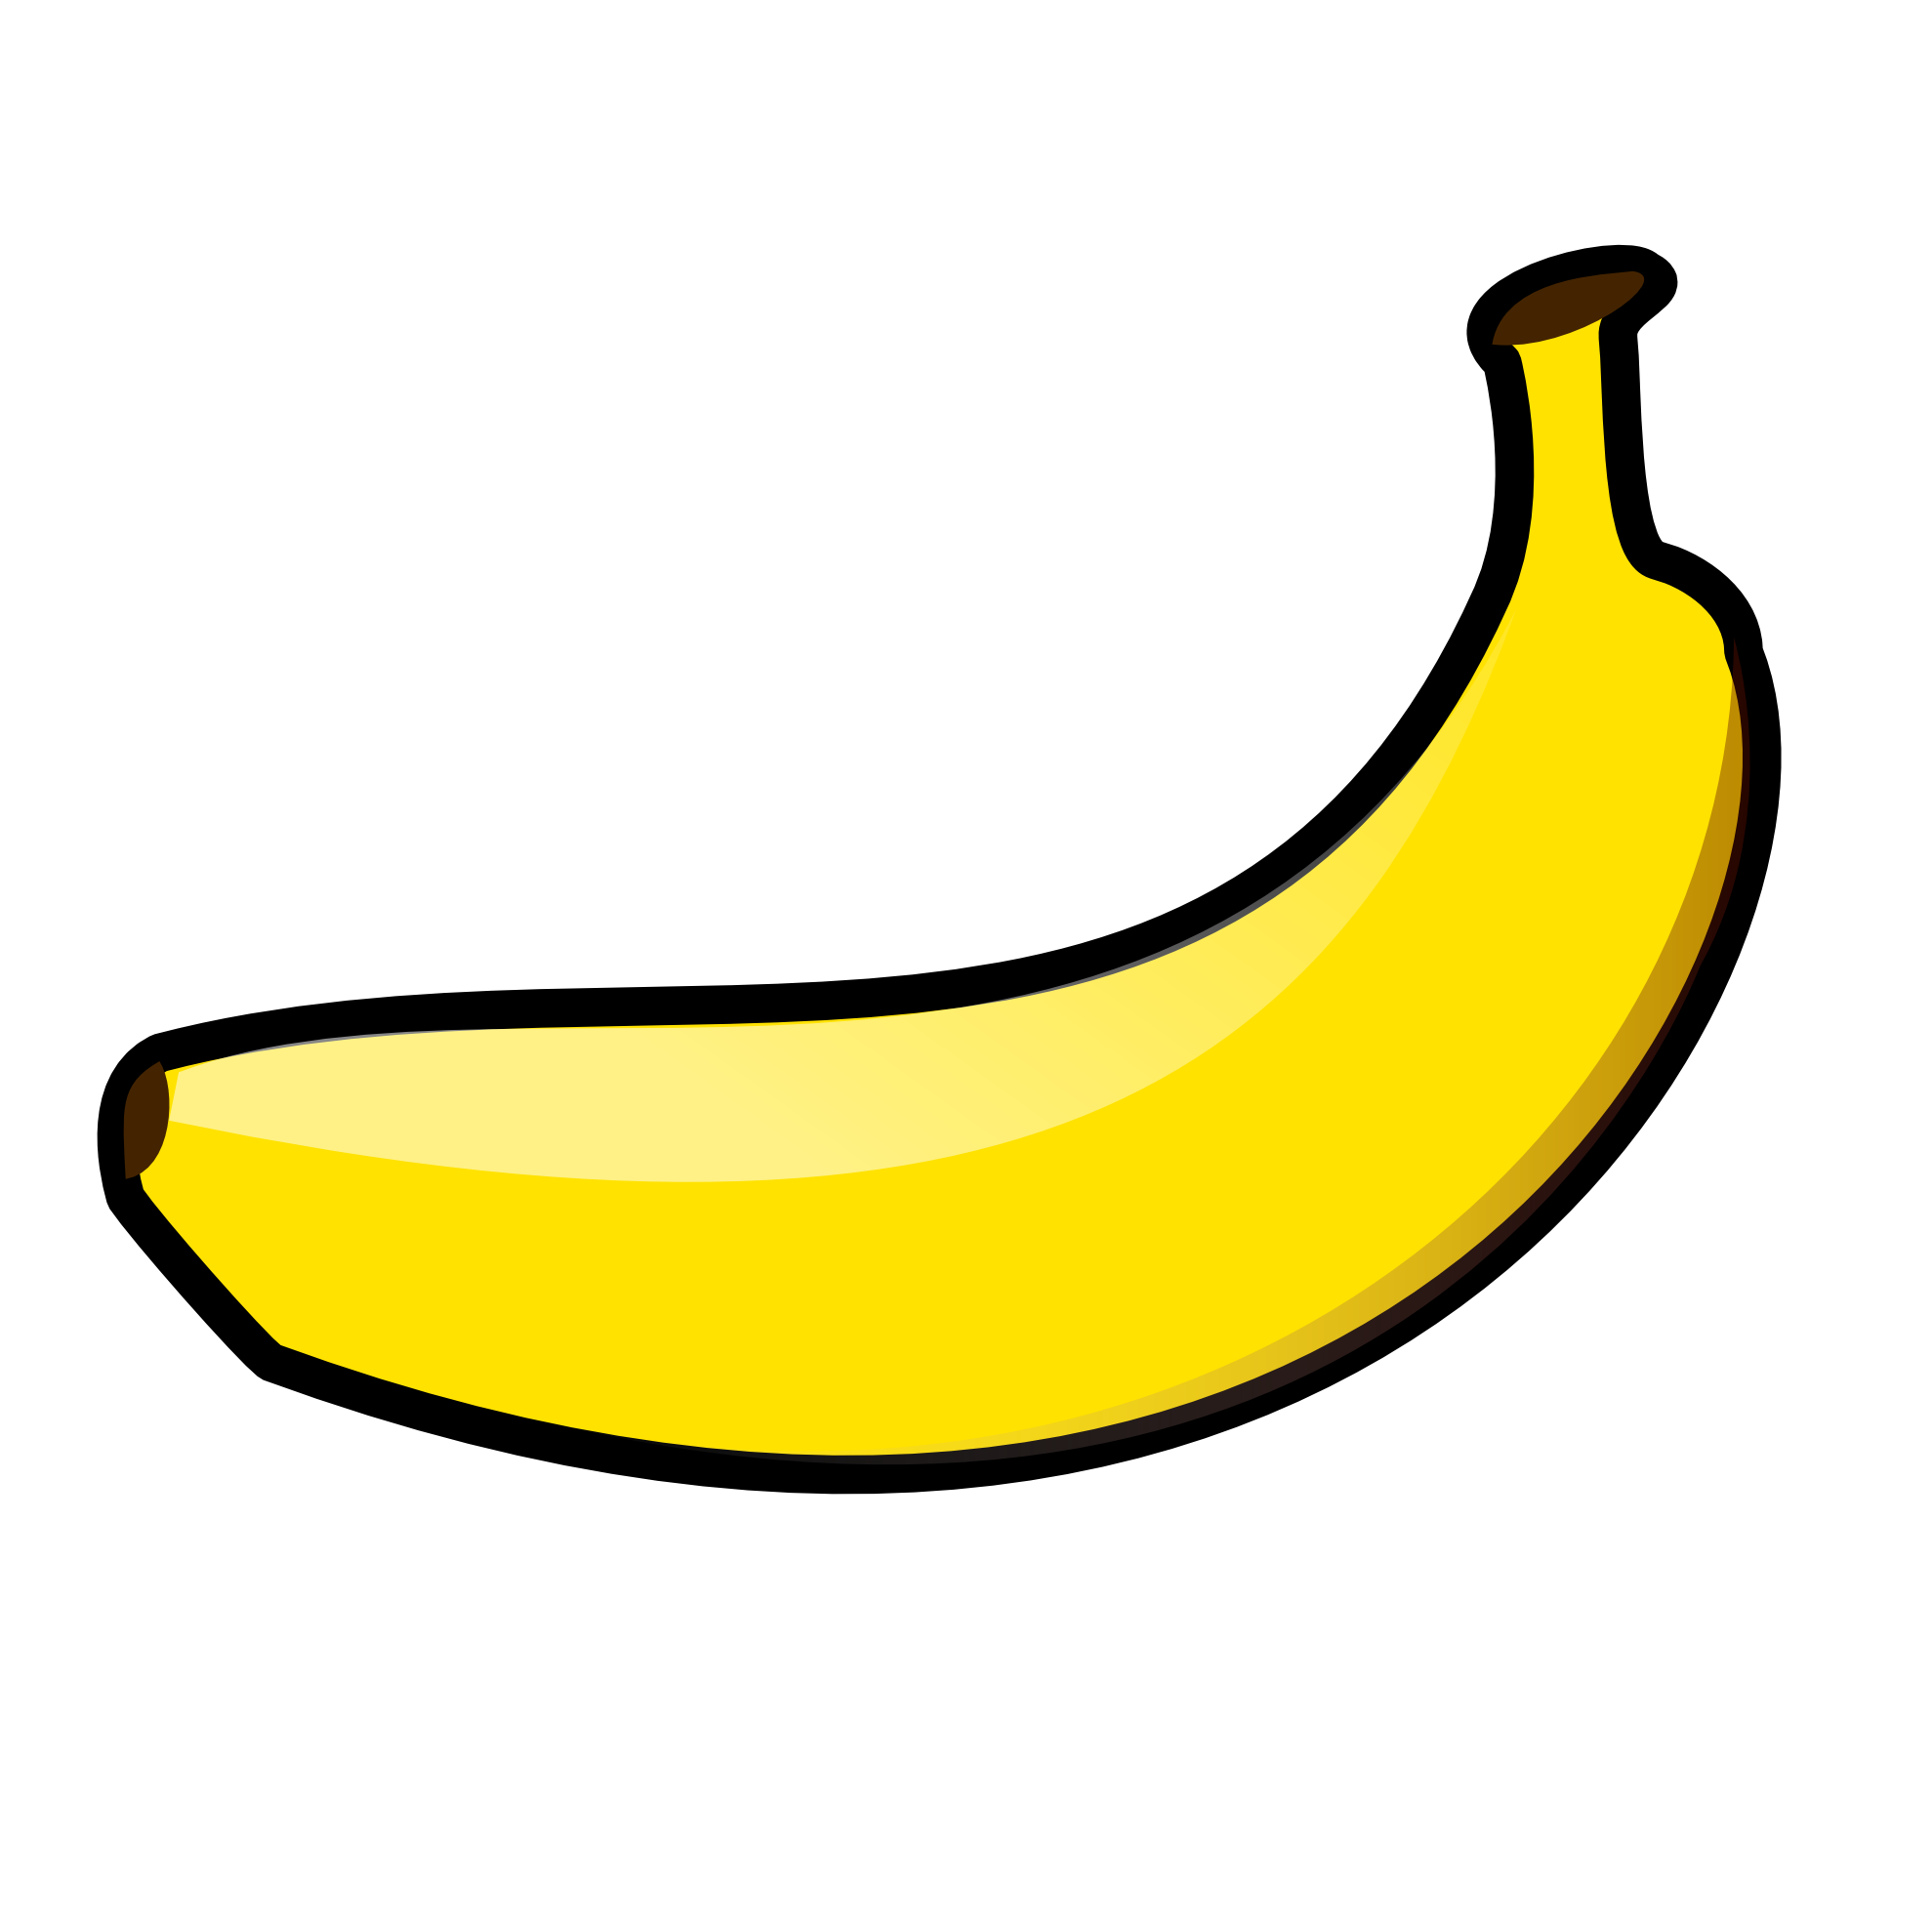 Banana family,Banana,Yellow,Fruit,Cooking plantain,Plant,Clip art,Food,Produce,Saba banana